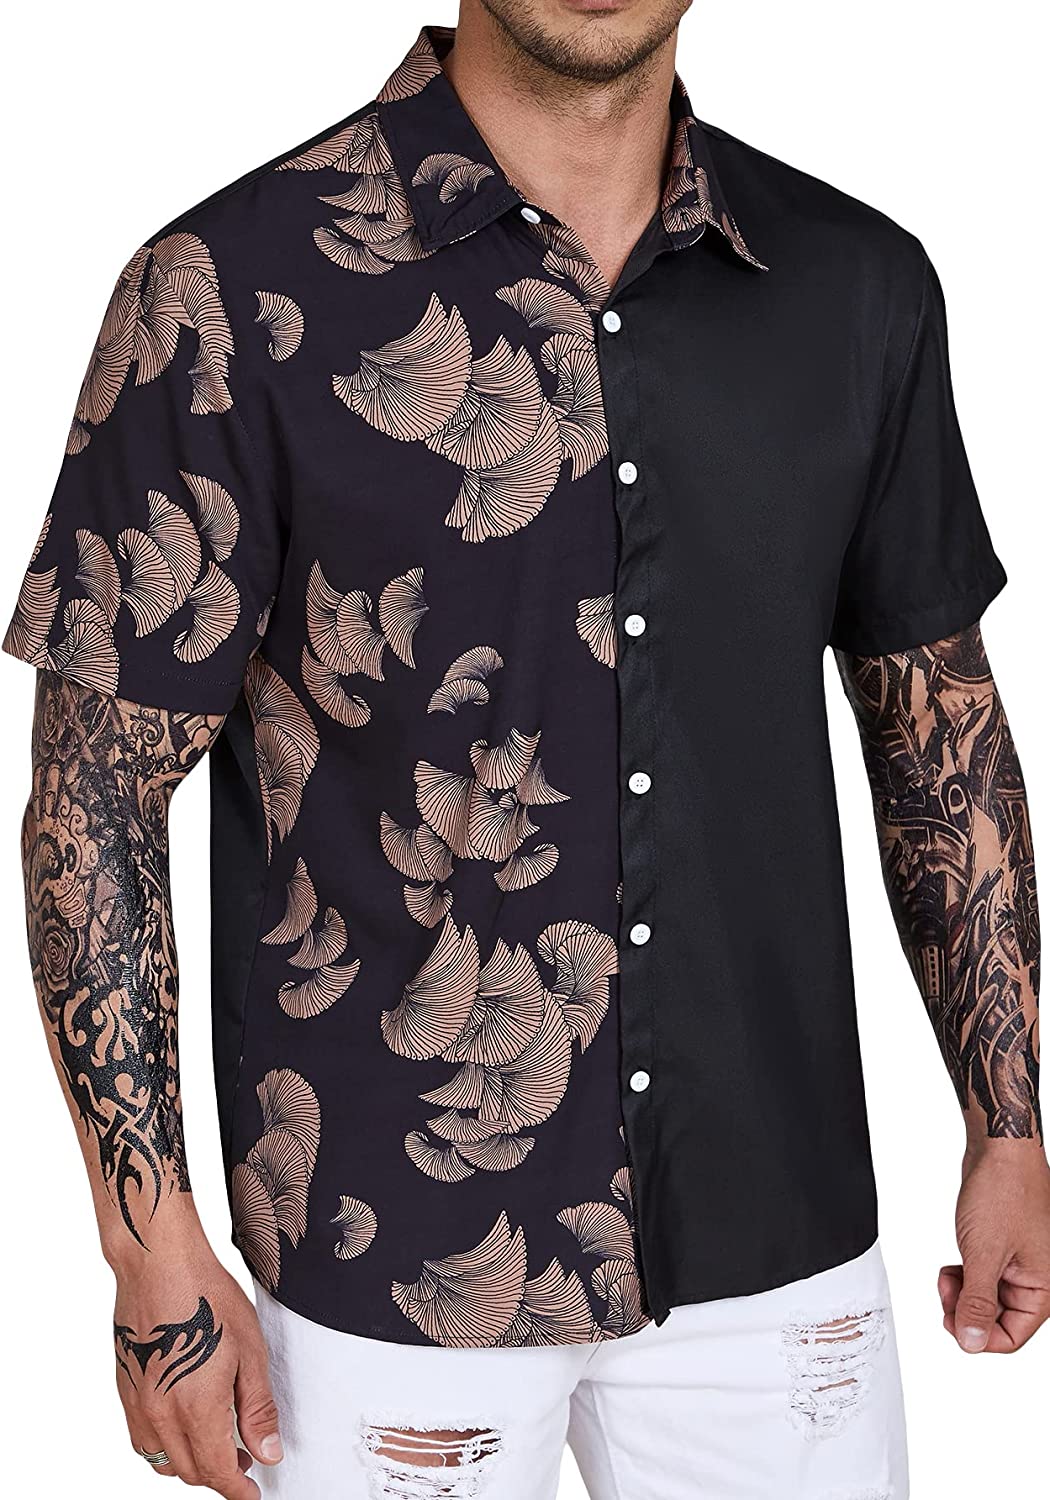 Men's Big & Tall Black Two Tone Vacation Style Short Sleeve Shirt